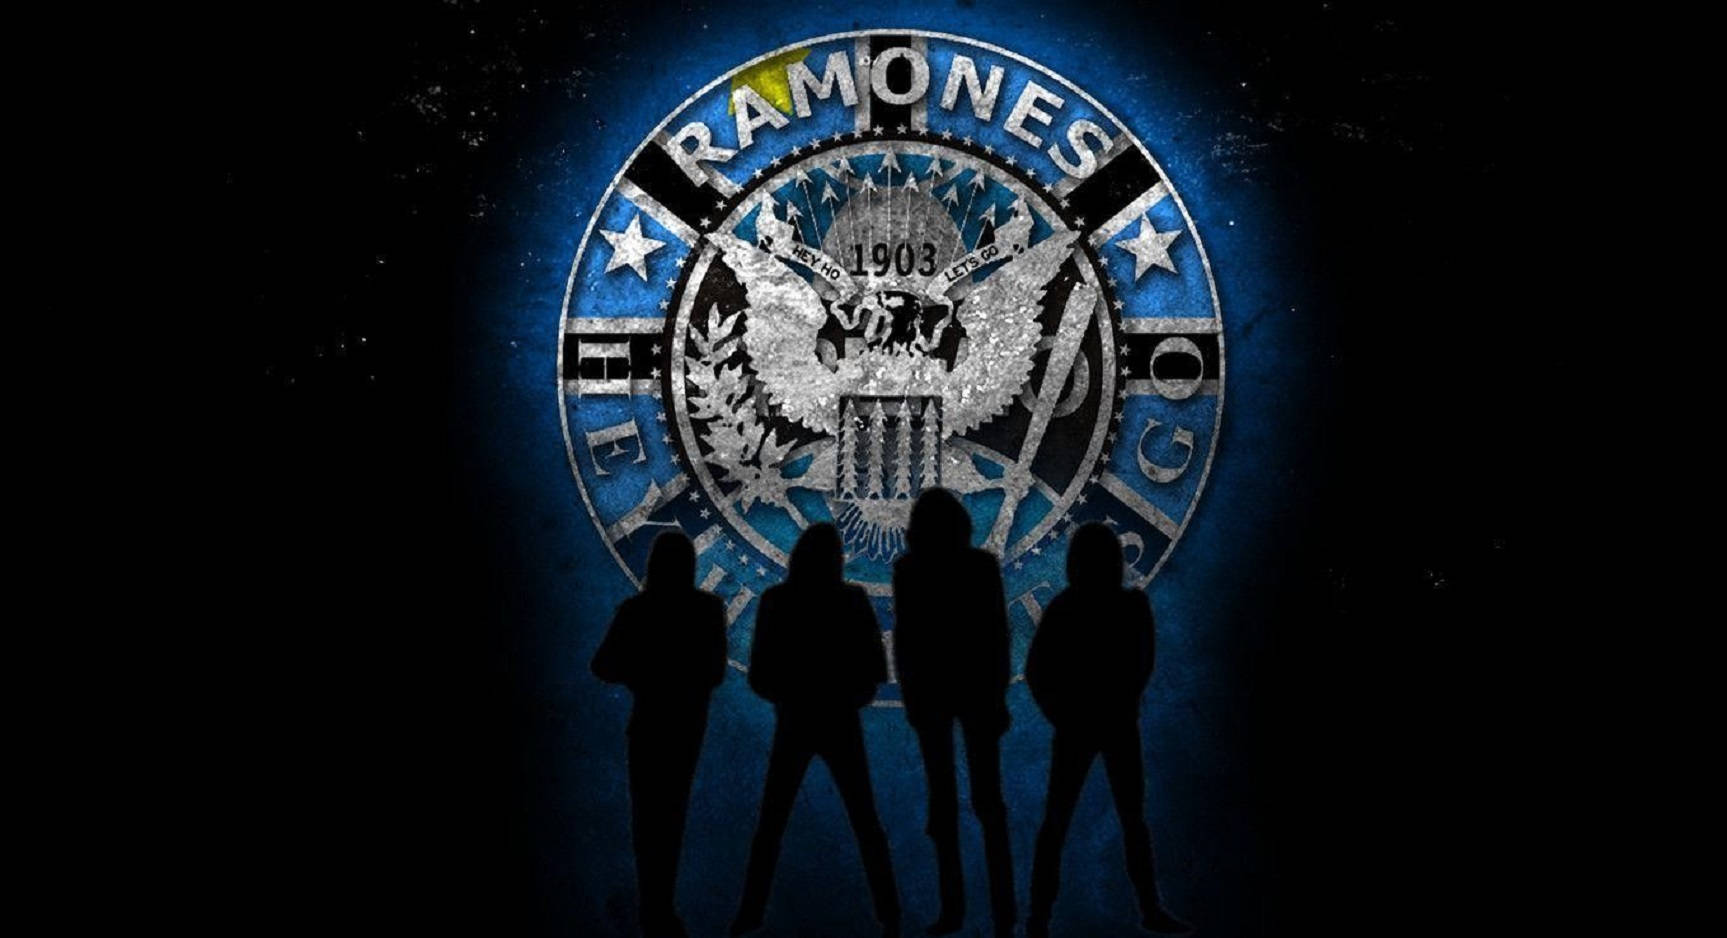 American Rock Band Ramones' Iconic Sealed Illustration Wallpaper